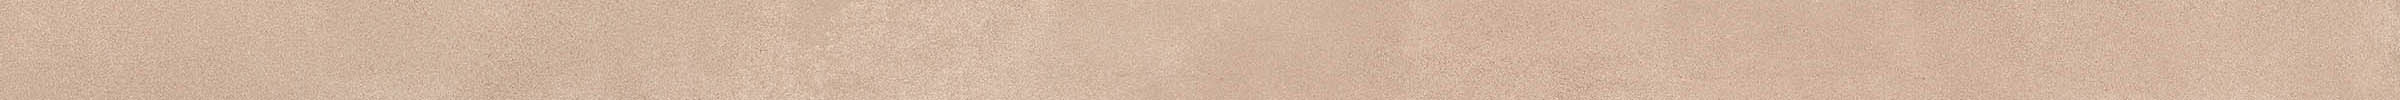 Imola Retina Terracotta Natural Flat Matt 183698 5x120cm rectified 6,5mm - RTN6 TERRA 5120